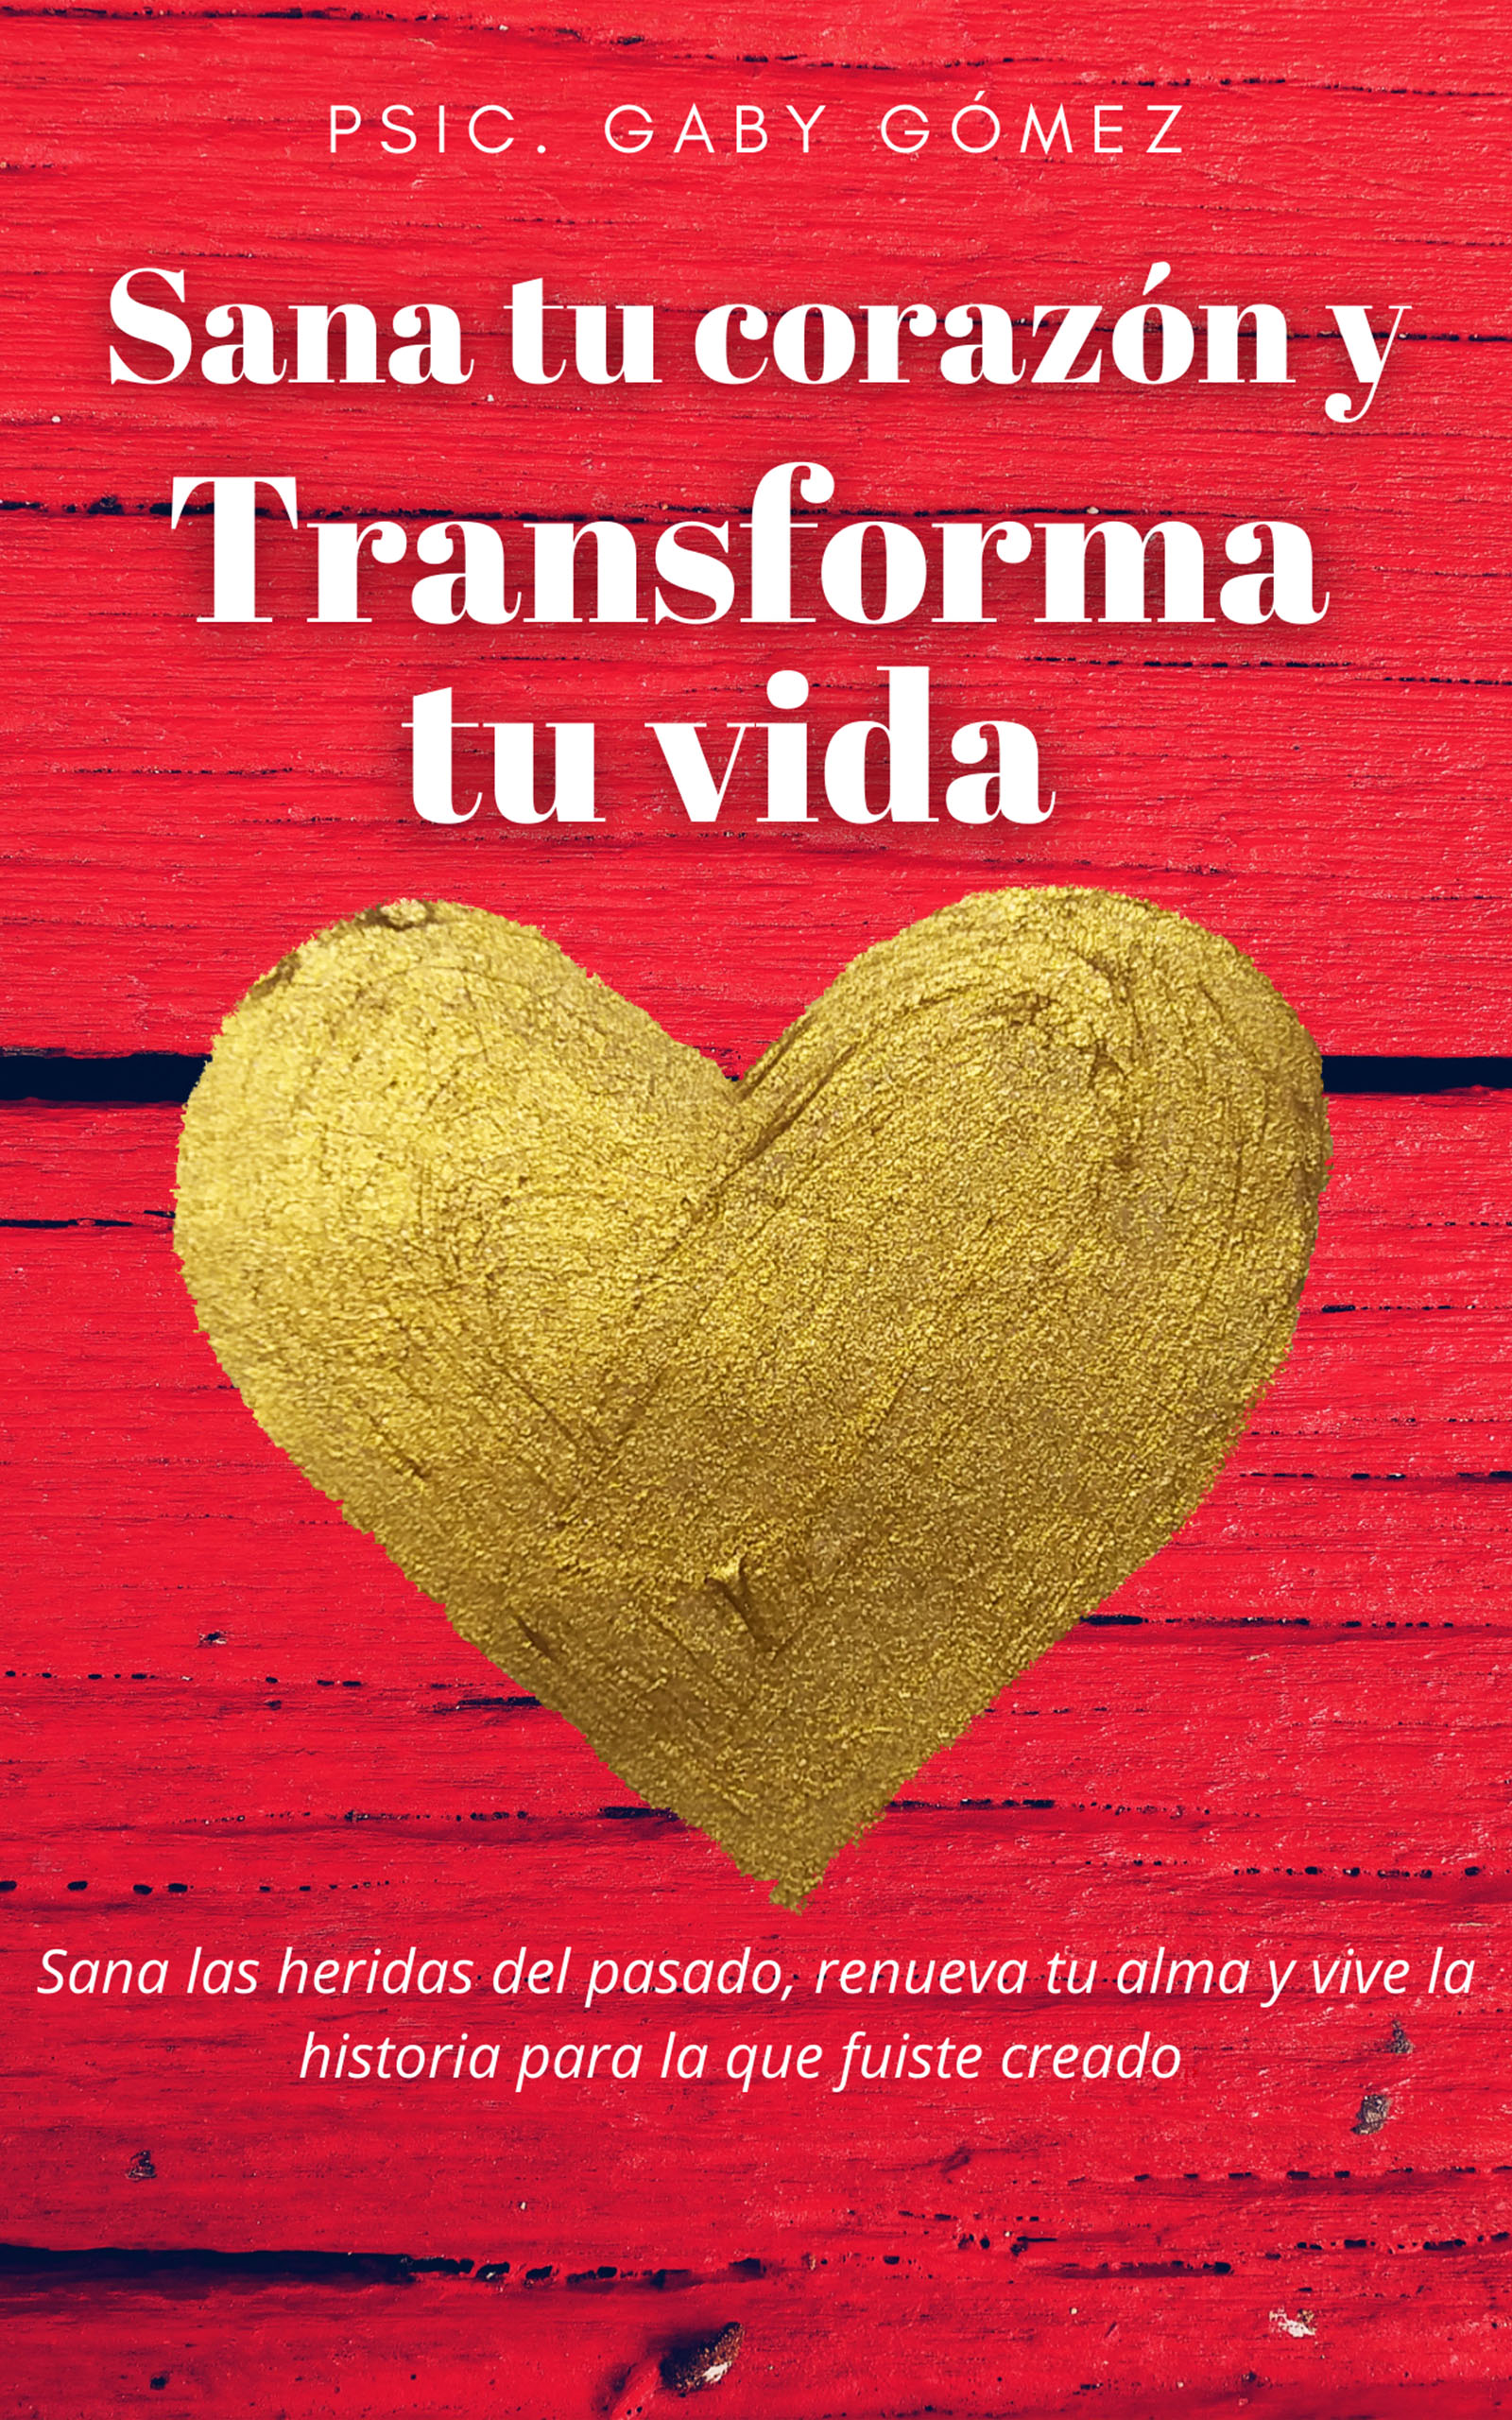 Sana tu corazón y transforma tu vida, de Psic Gaby Gómez